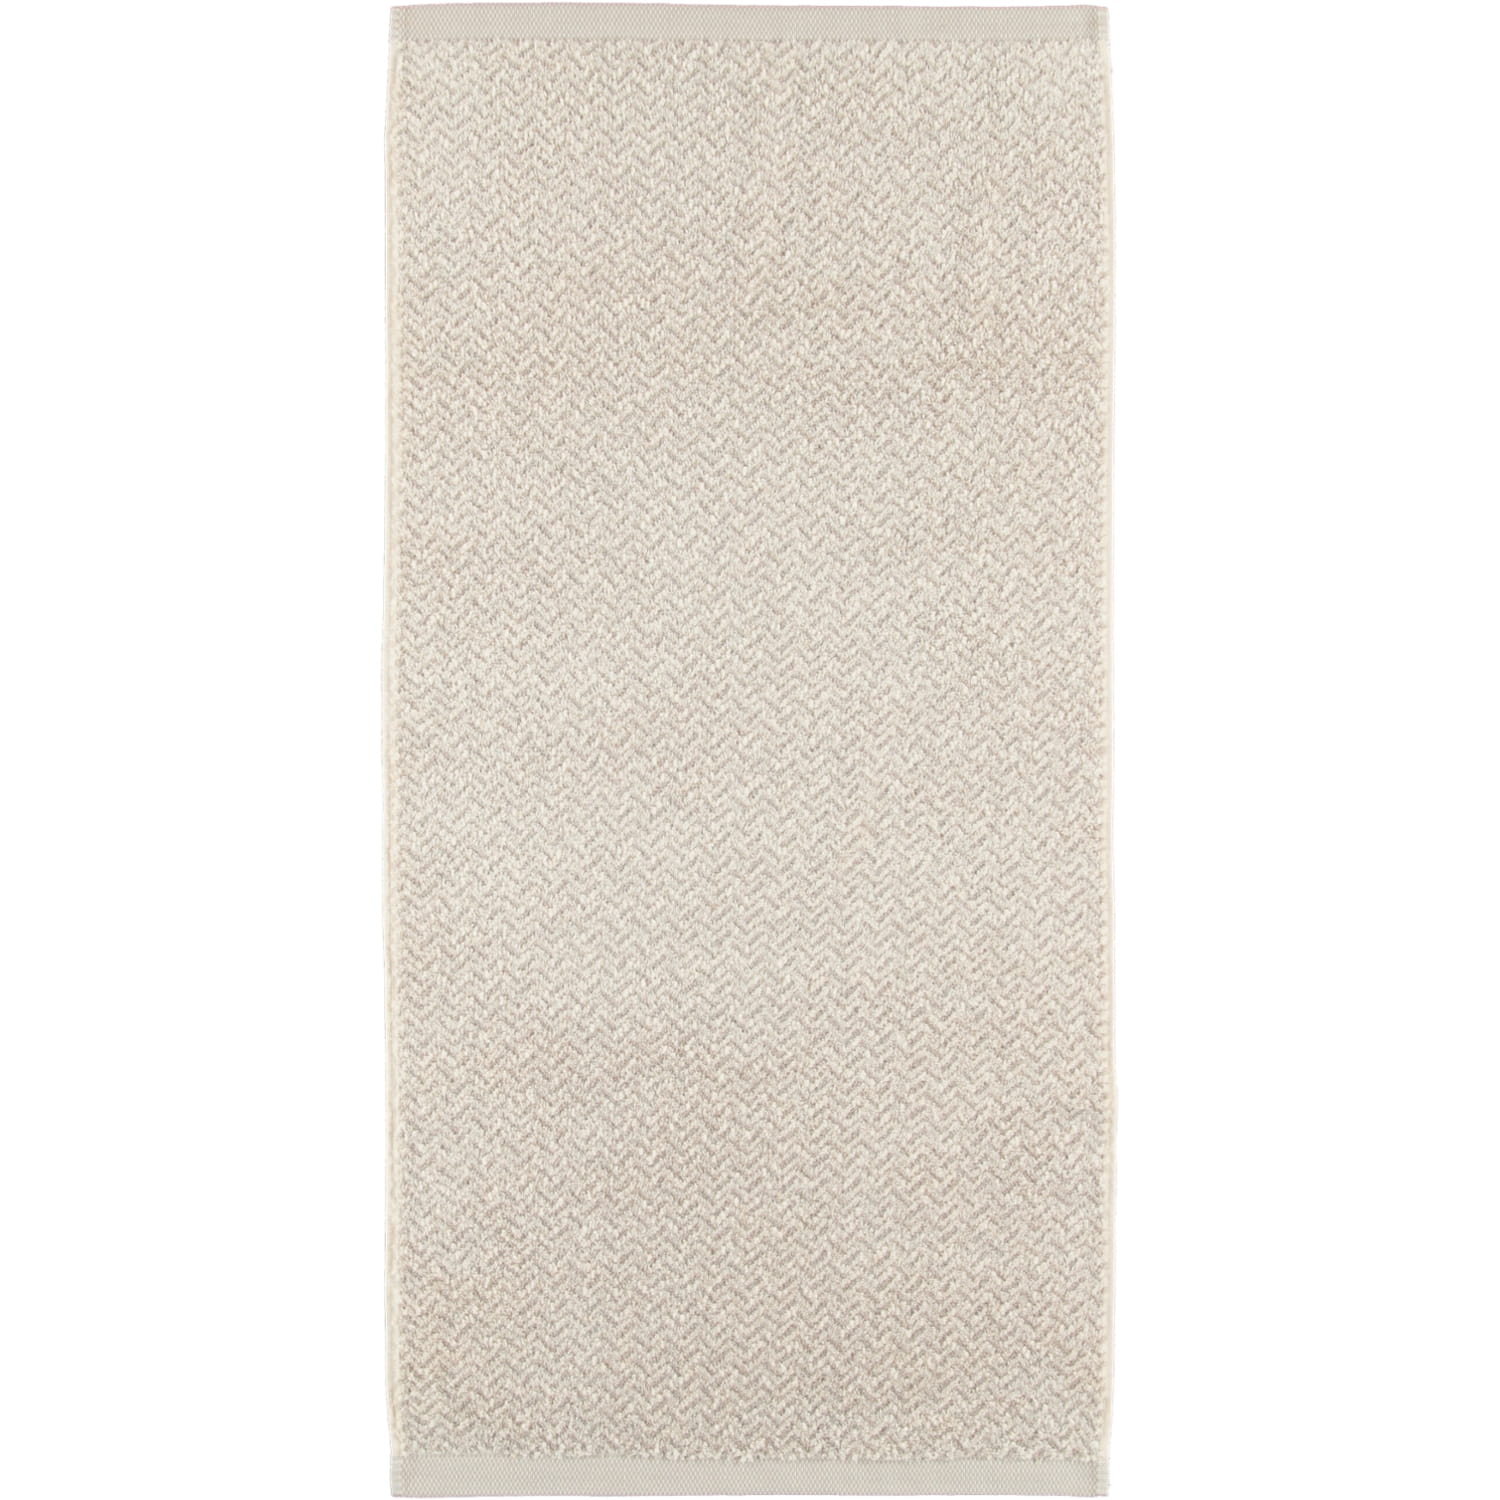 Möve - Brooklyn nature/cashmere - Handtuch 071 cm Handtücher | Farbe: | Handtuch - Fischgrat - (1-0567/8970) 50x100